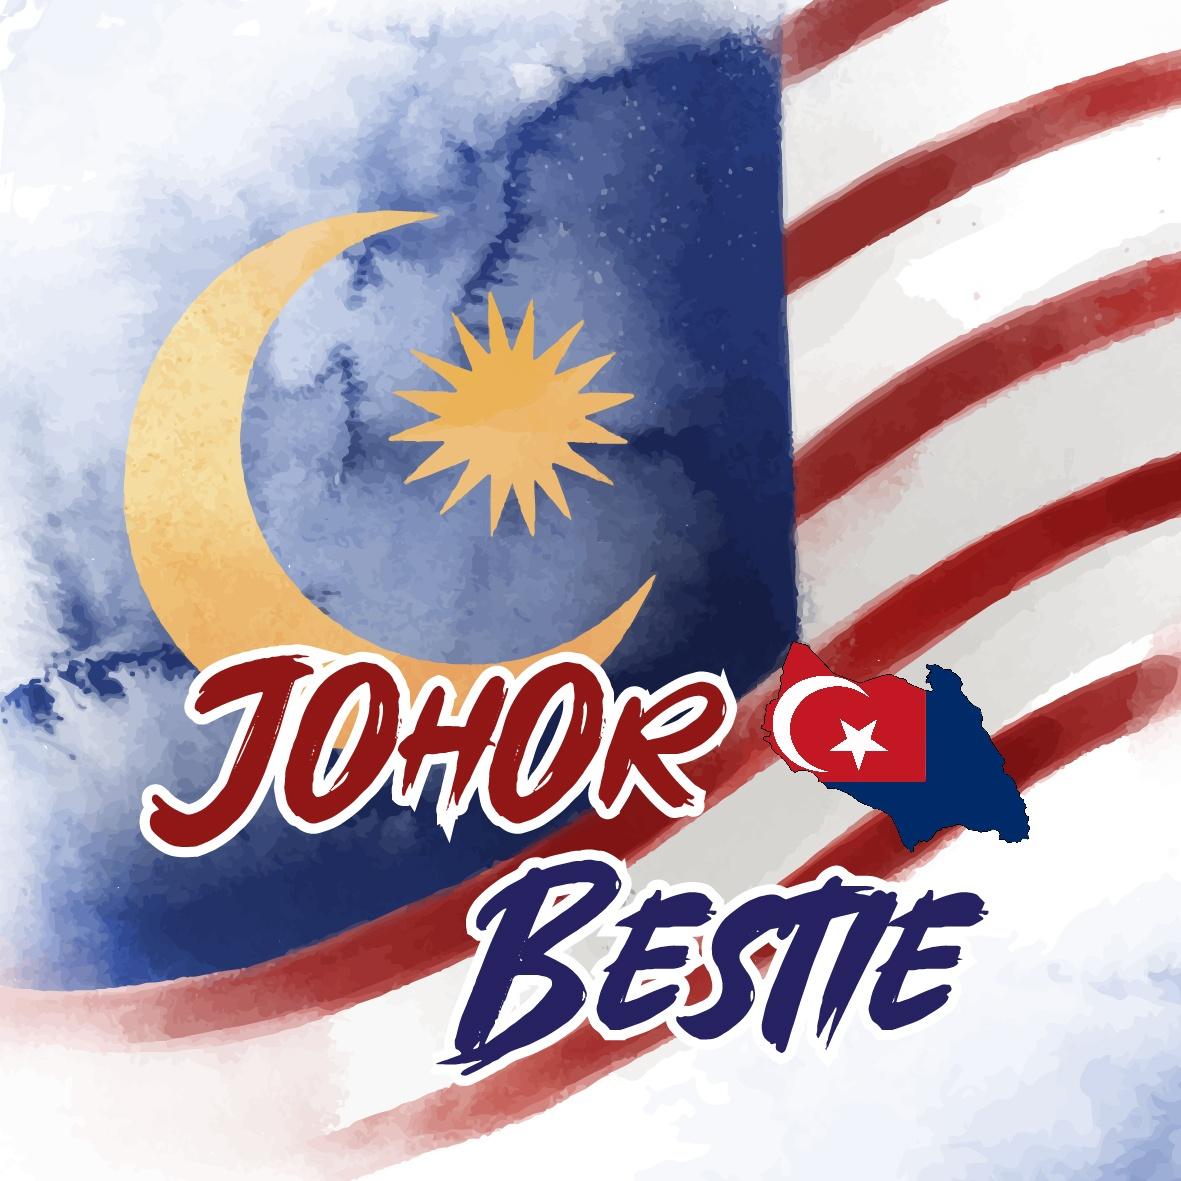 Imej Johor Bestie